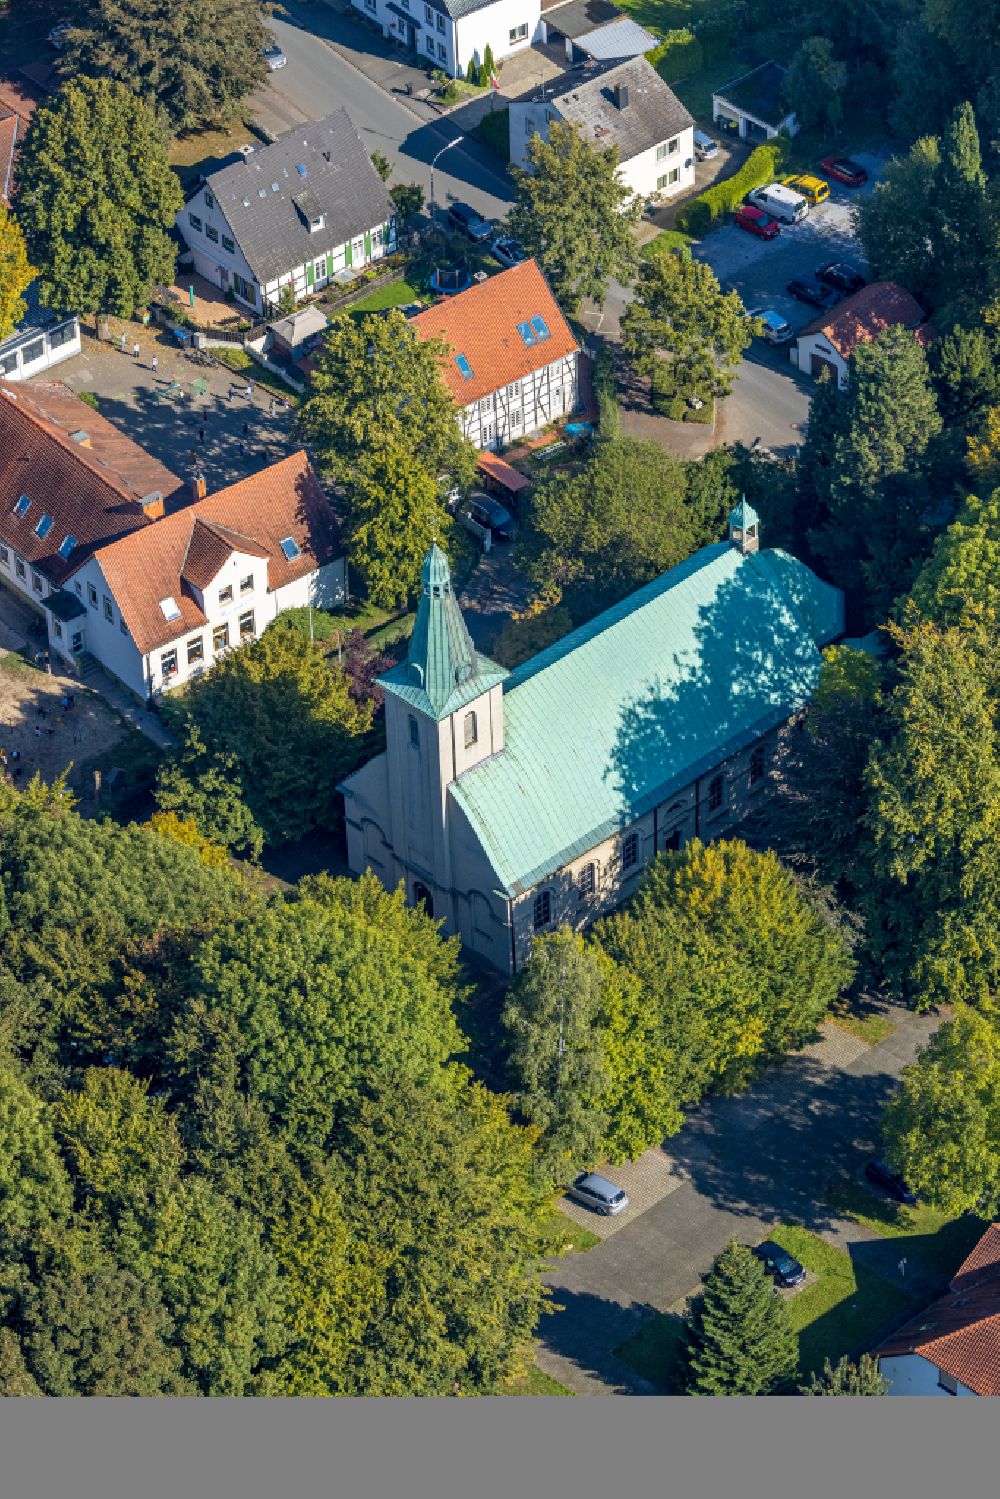 Aerial image Hemmerde - Church building Kath. Kirche St. Peter and Paul Hemmerde on street Friedhofsweg in Hemmerde in the state North Rhine-Westphalia, Germany